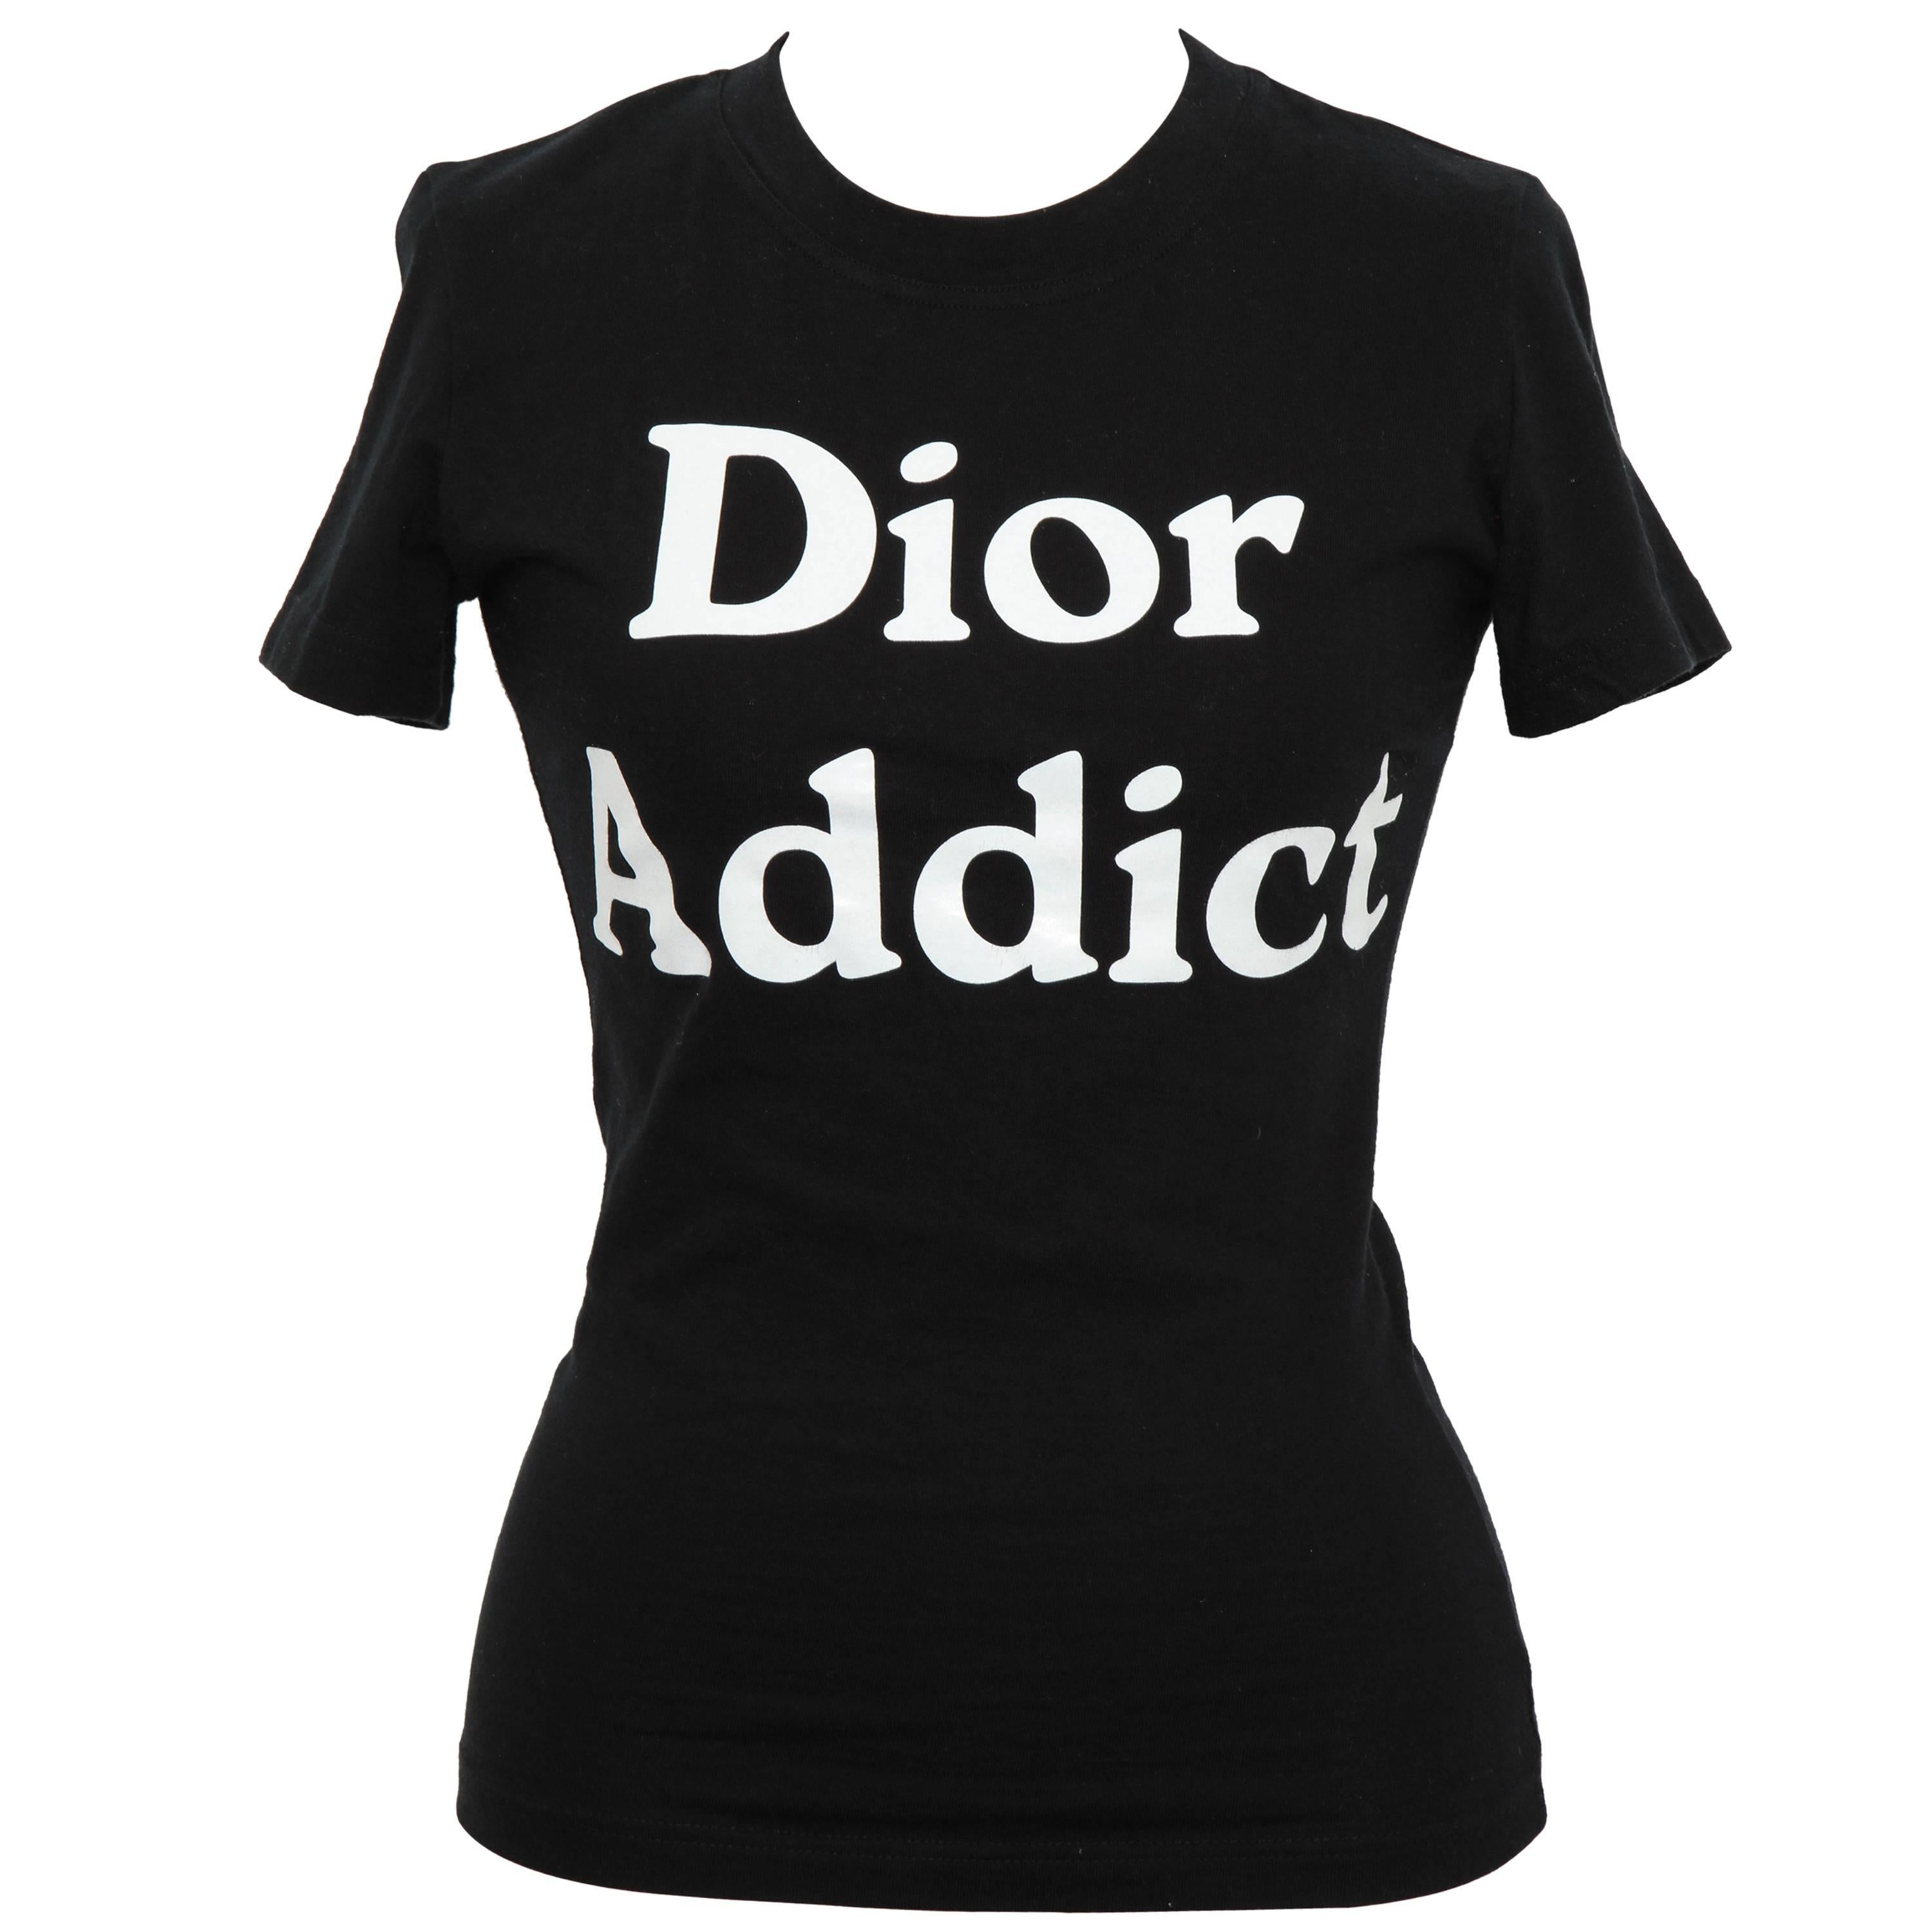 John Galliano for Christian Dior "Dior Addict" Tank Top T-Shirt For Sale